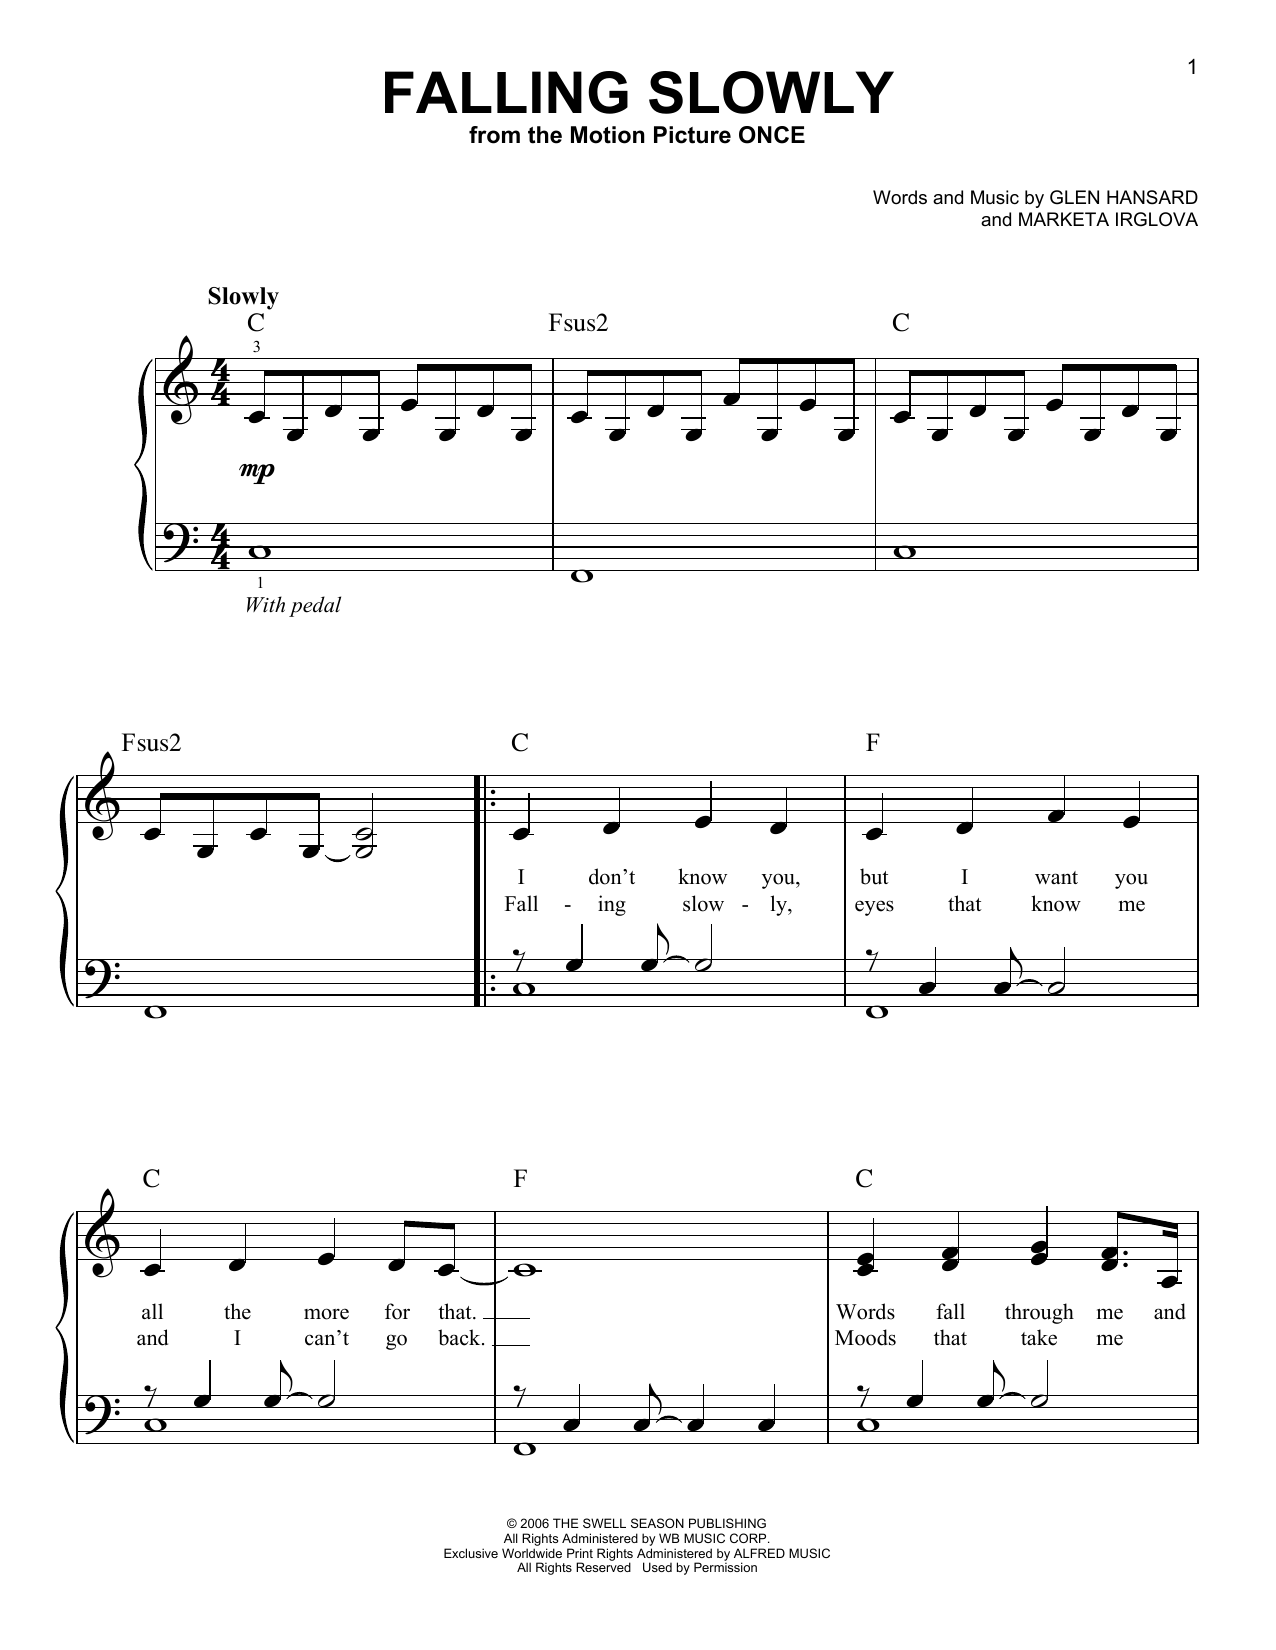 Glen Hansard & Marketa Irglova Falling Slowly (from Once) Sheet Music Notes & Chords for Lyrics & Chords - Download or Print PDF